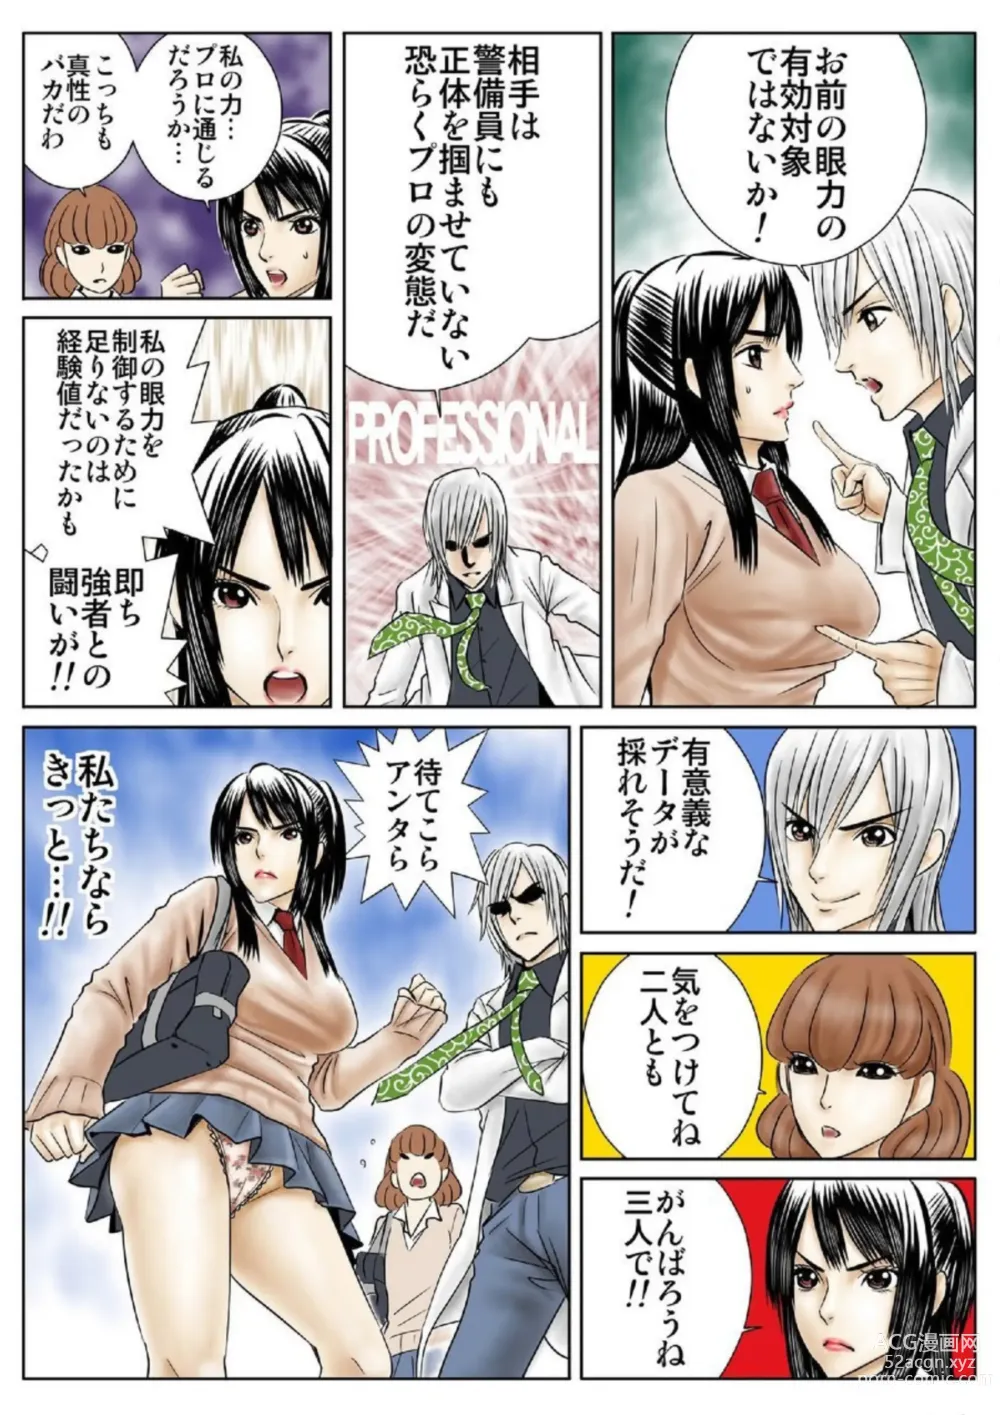 Page 7 of manga Ganriki! Miryō no Hōkago 1